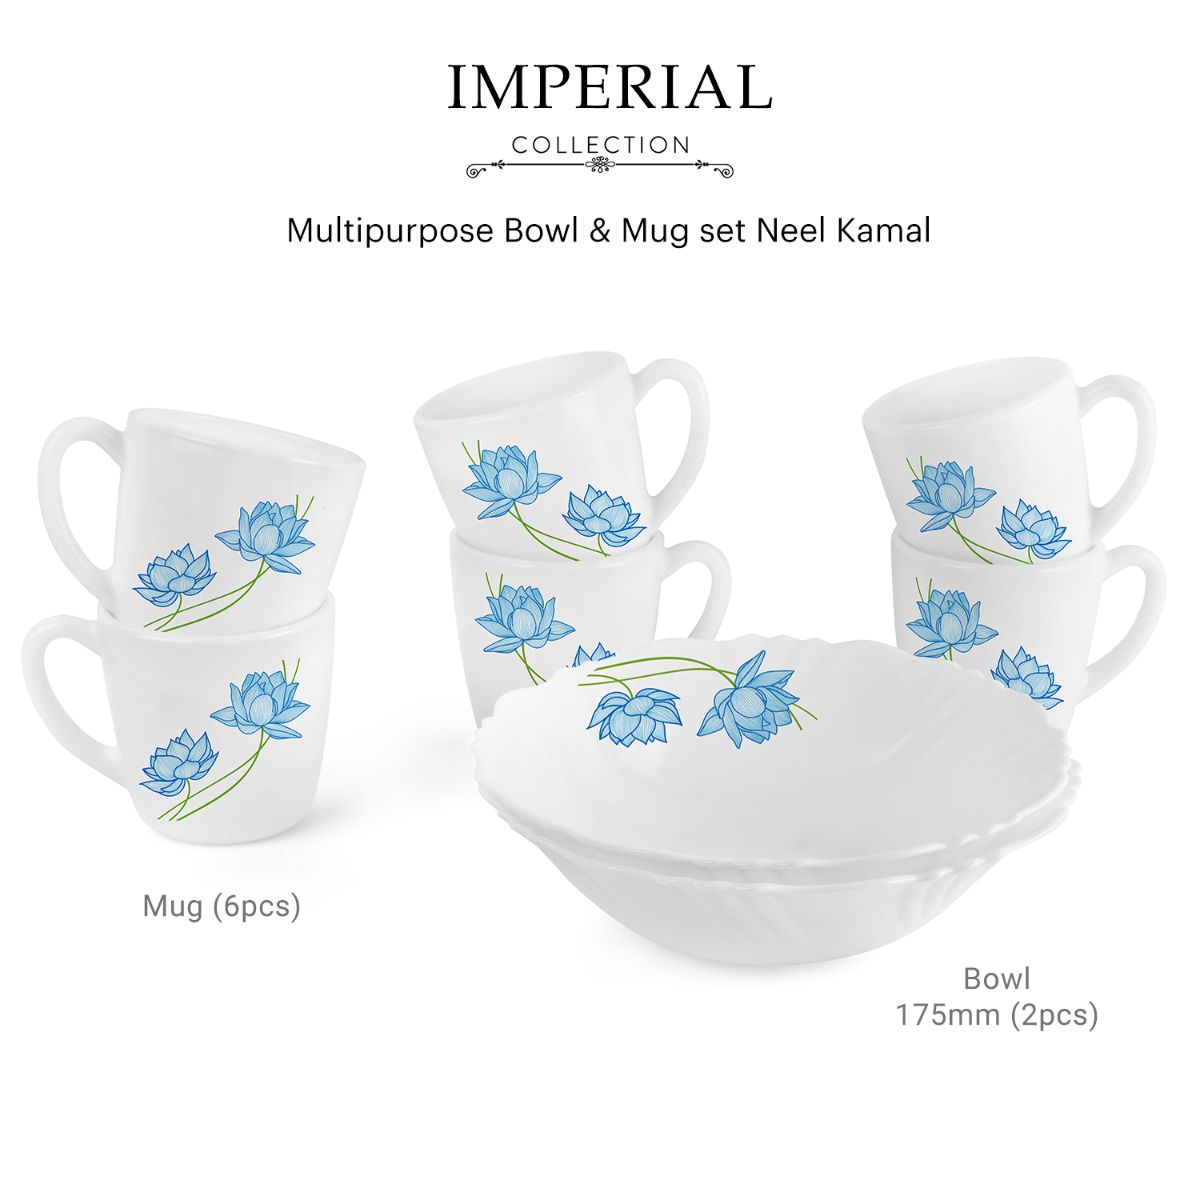 Imperial Series Quick Bite Bowl & Mug Gift set, 8 Pieces Neelkamal / 8 Pieces